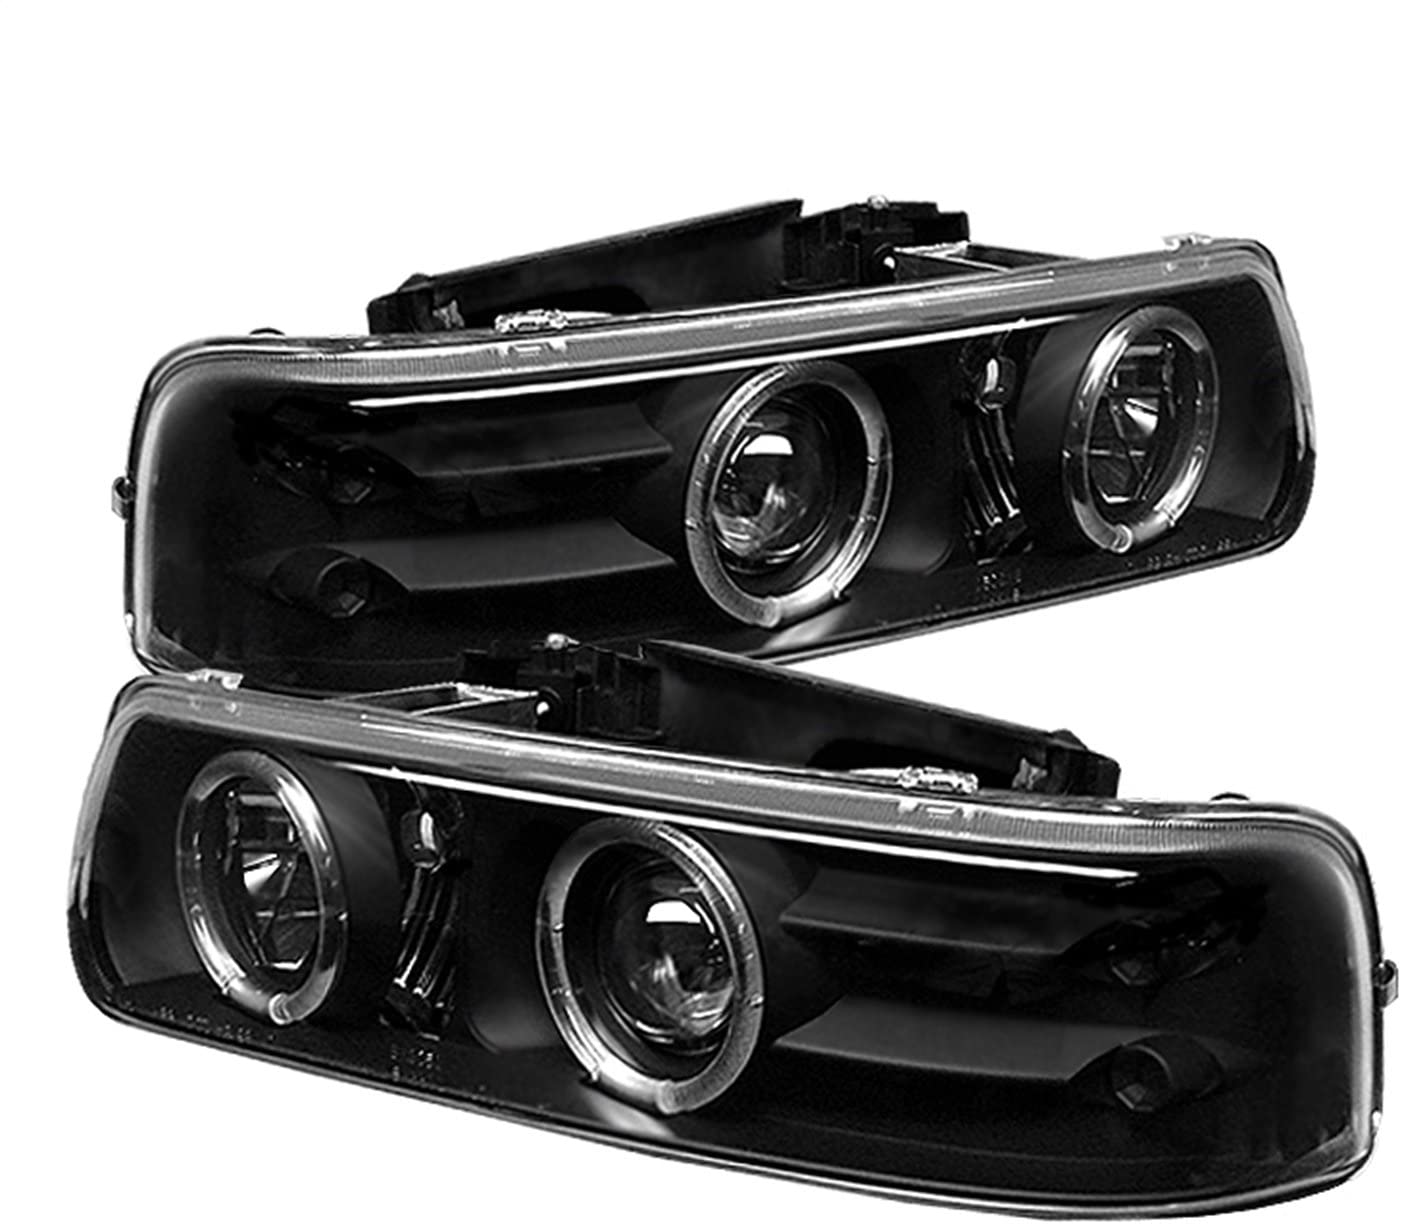 Spyder Auto 5009593 LED Halo Projector Headlights Black/Clear